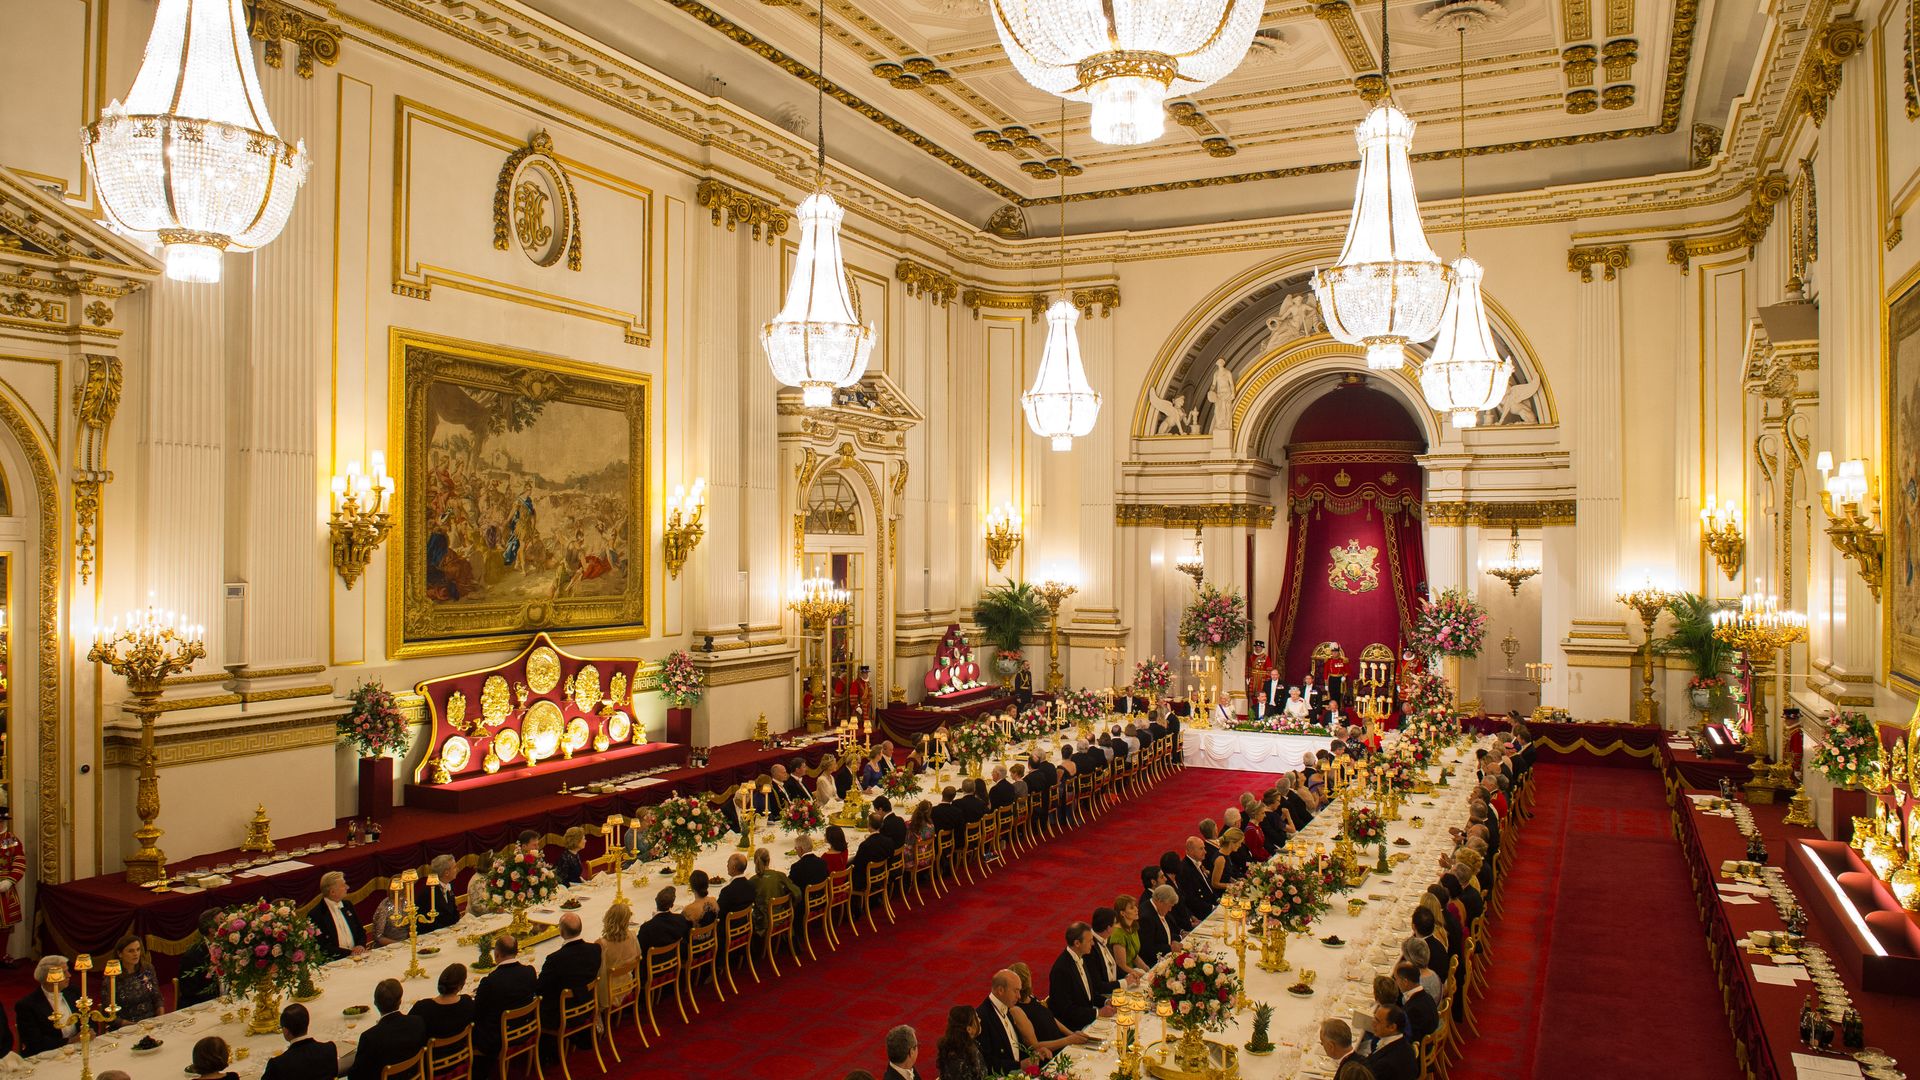 Guests sat inside the Ballroom inside Buckingham Palace